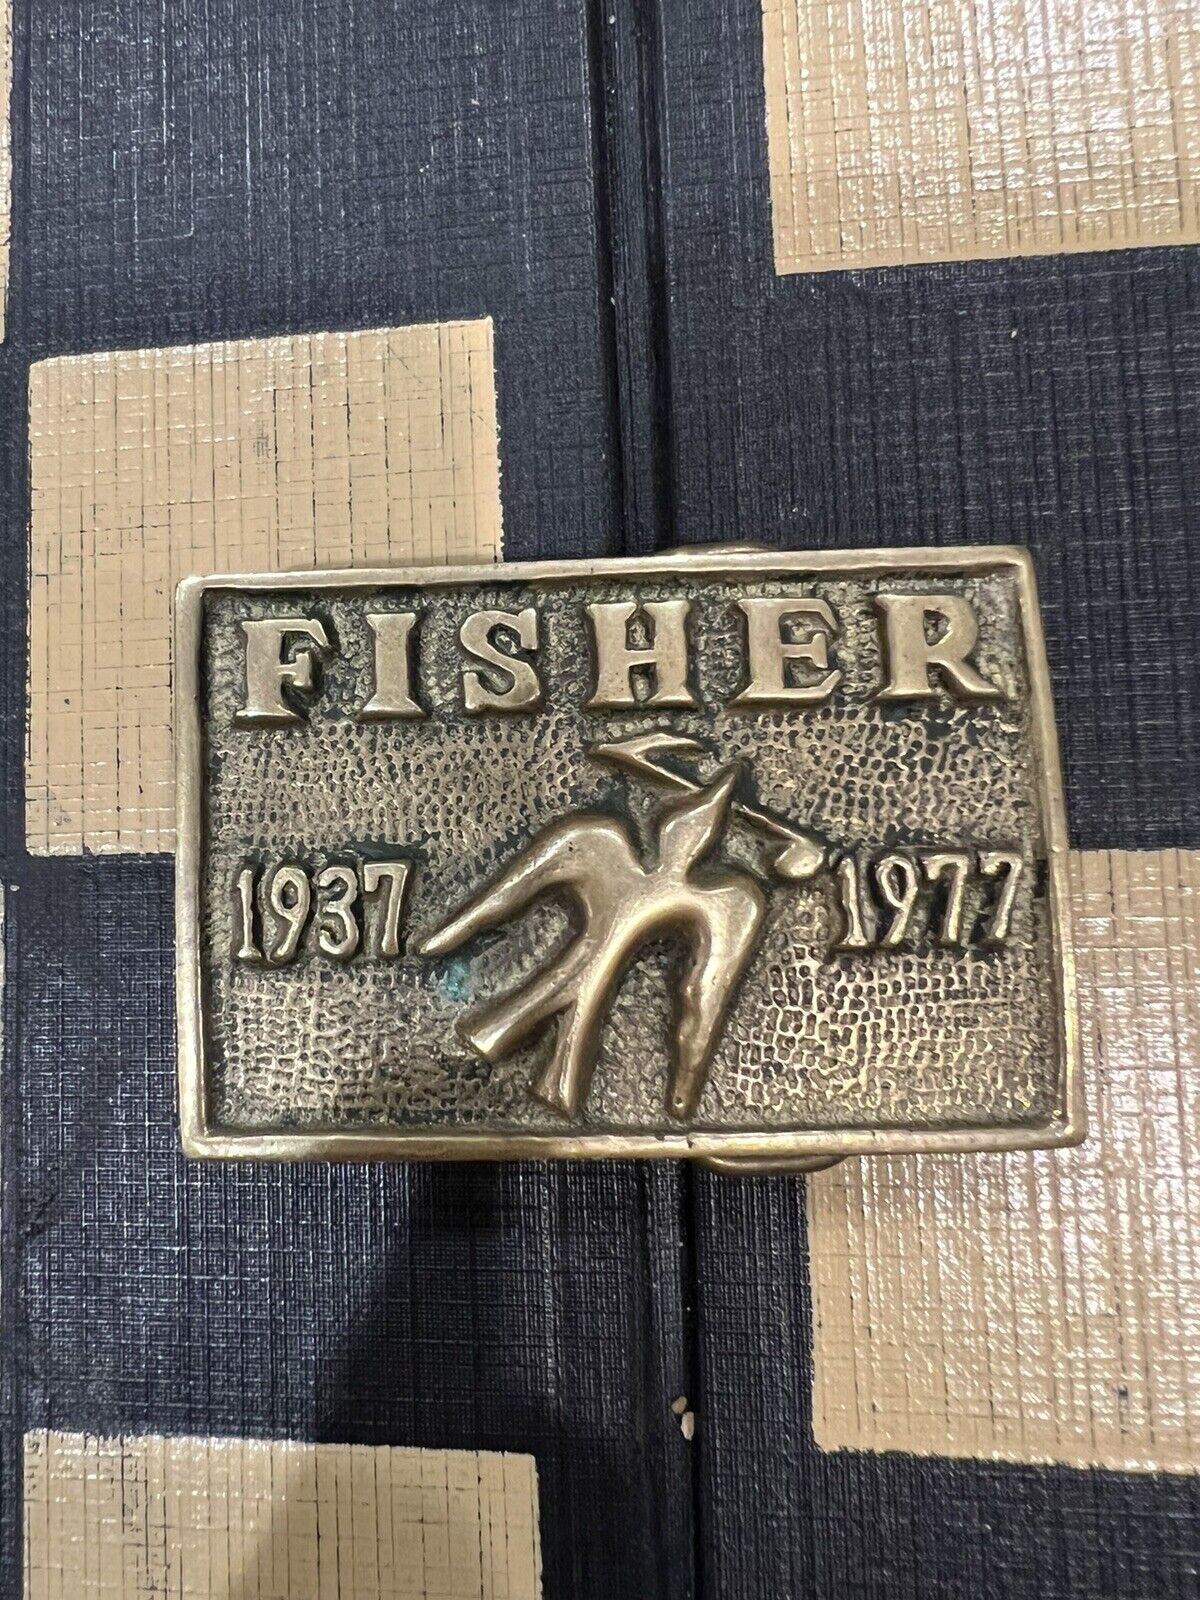 Fisher 1937-1977 brass belt buckle 40th anniv tube amp era 500c receiver era